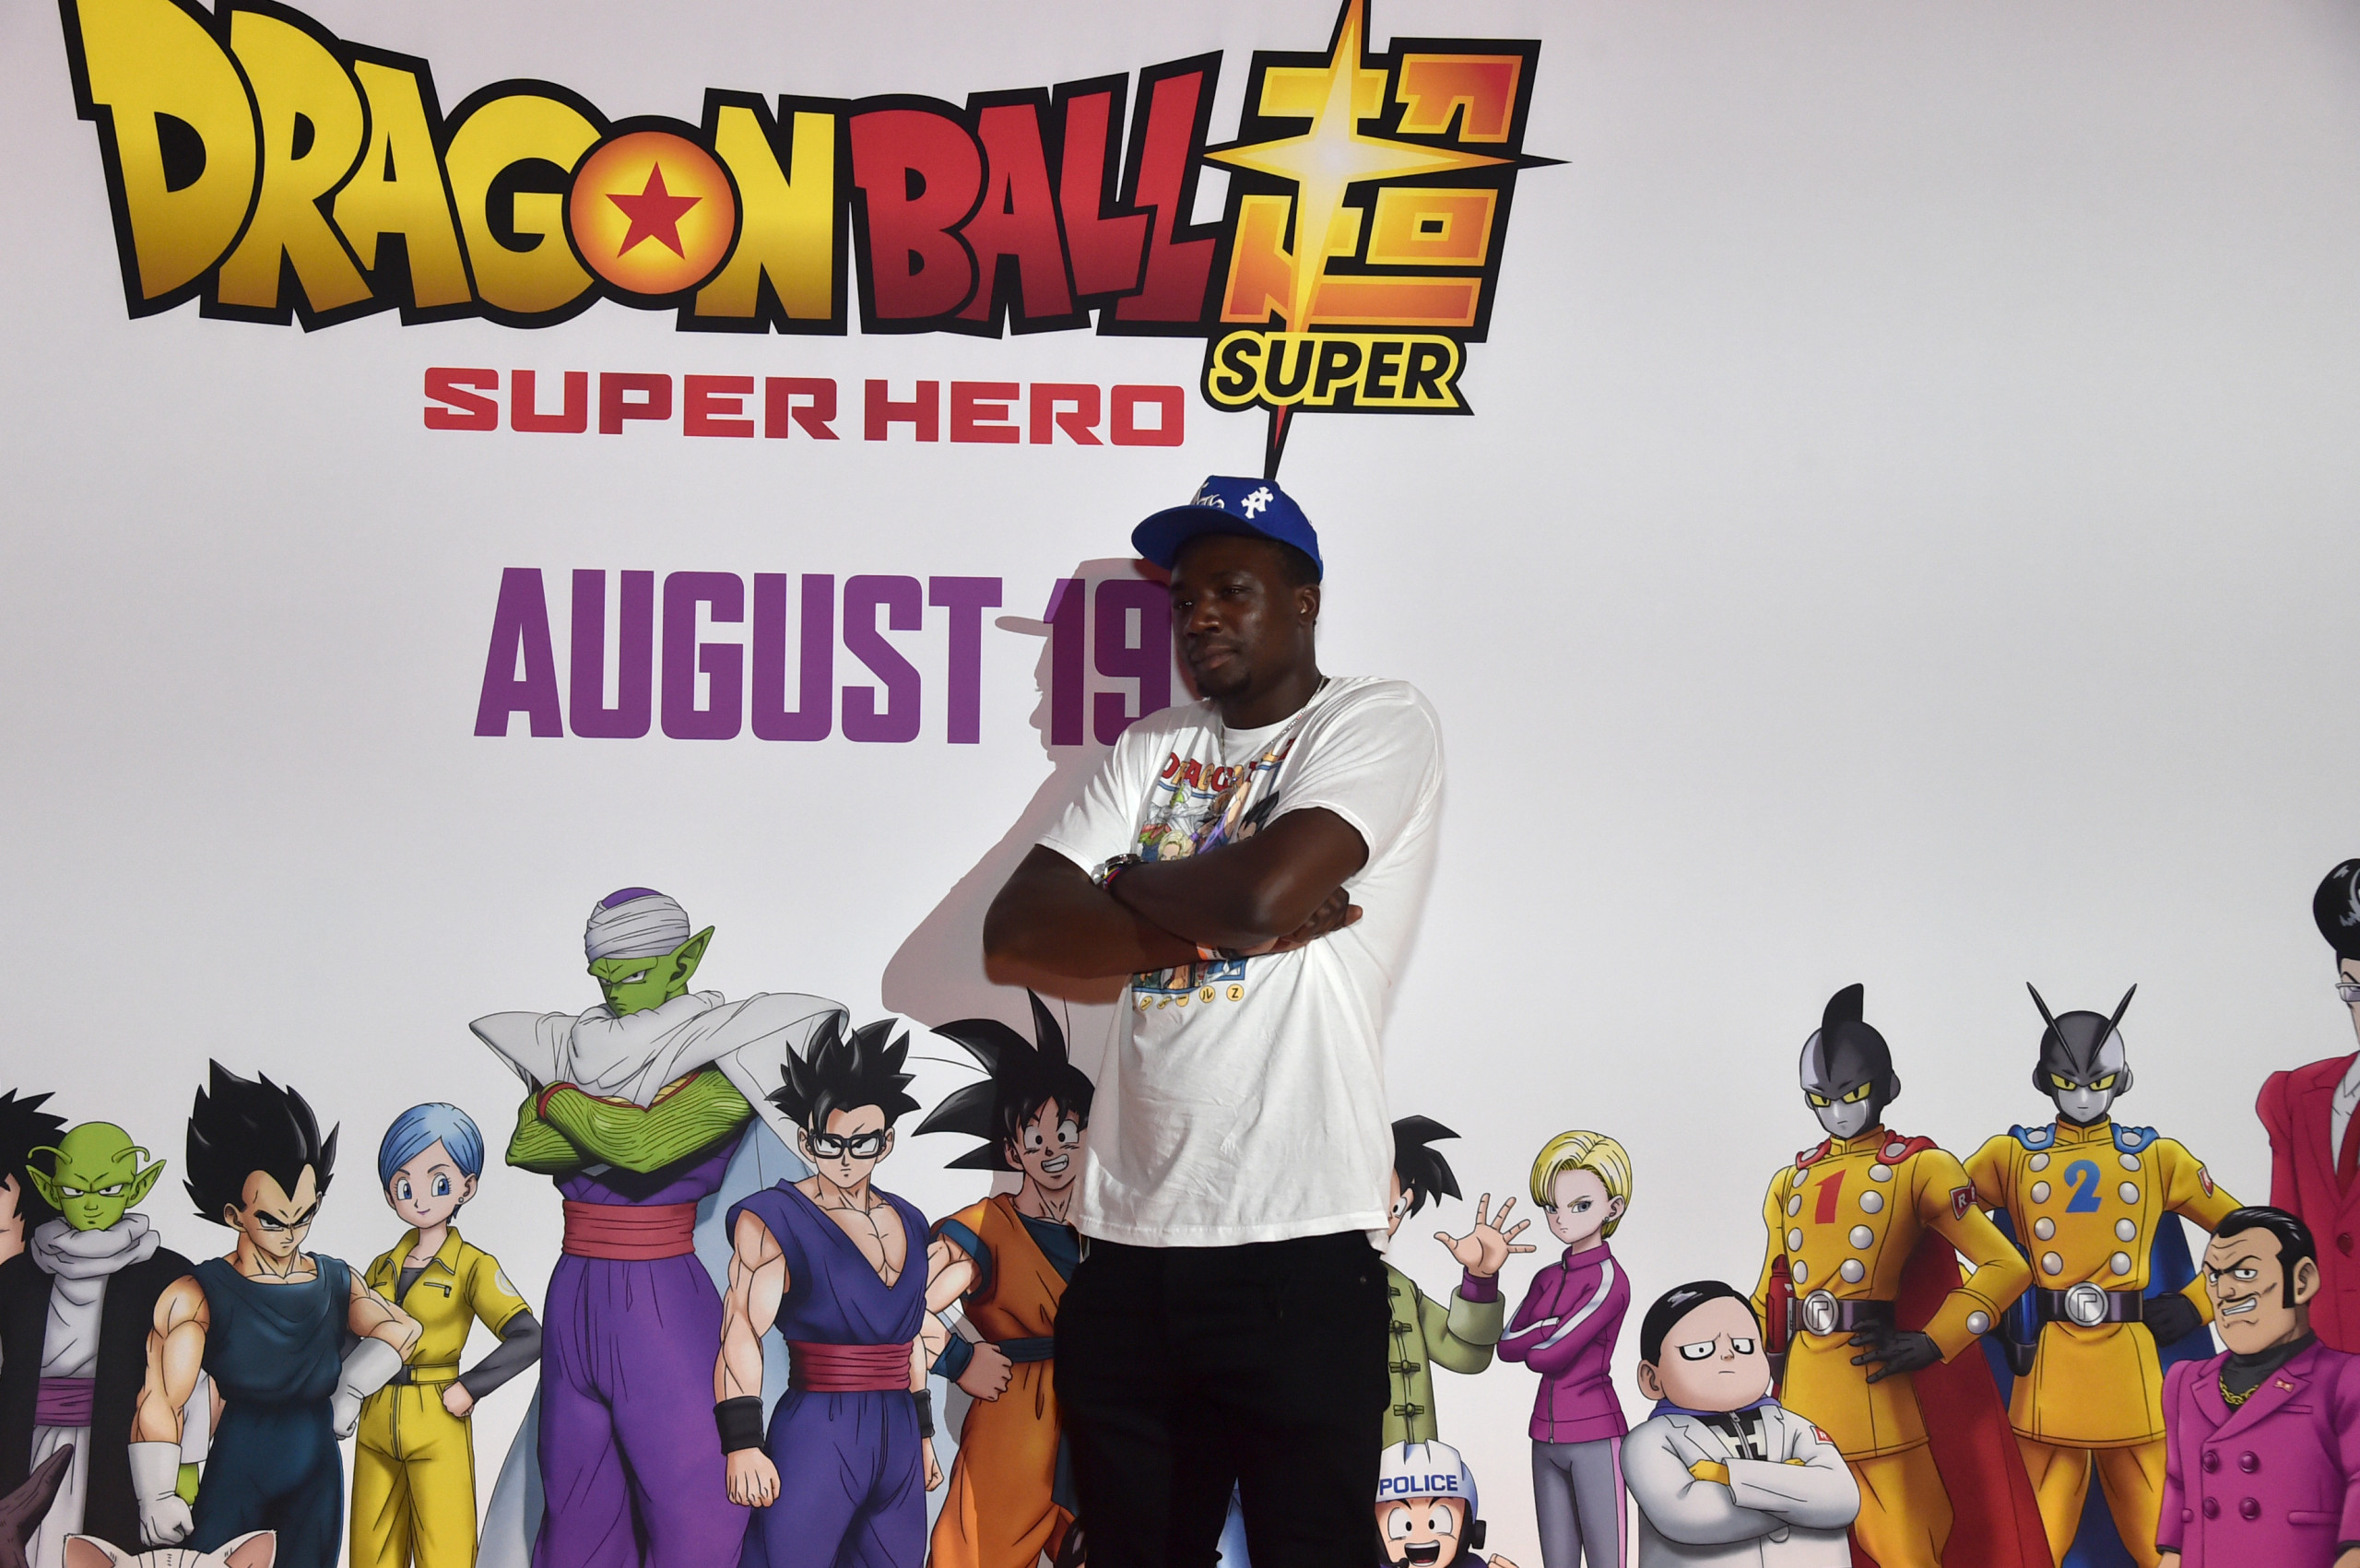 Crunchyroll Reveals 'Dragon Ball Super: Super Hero' North American